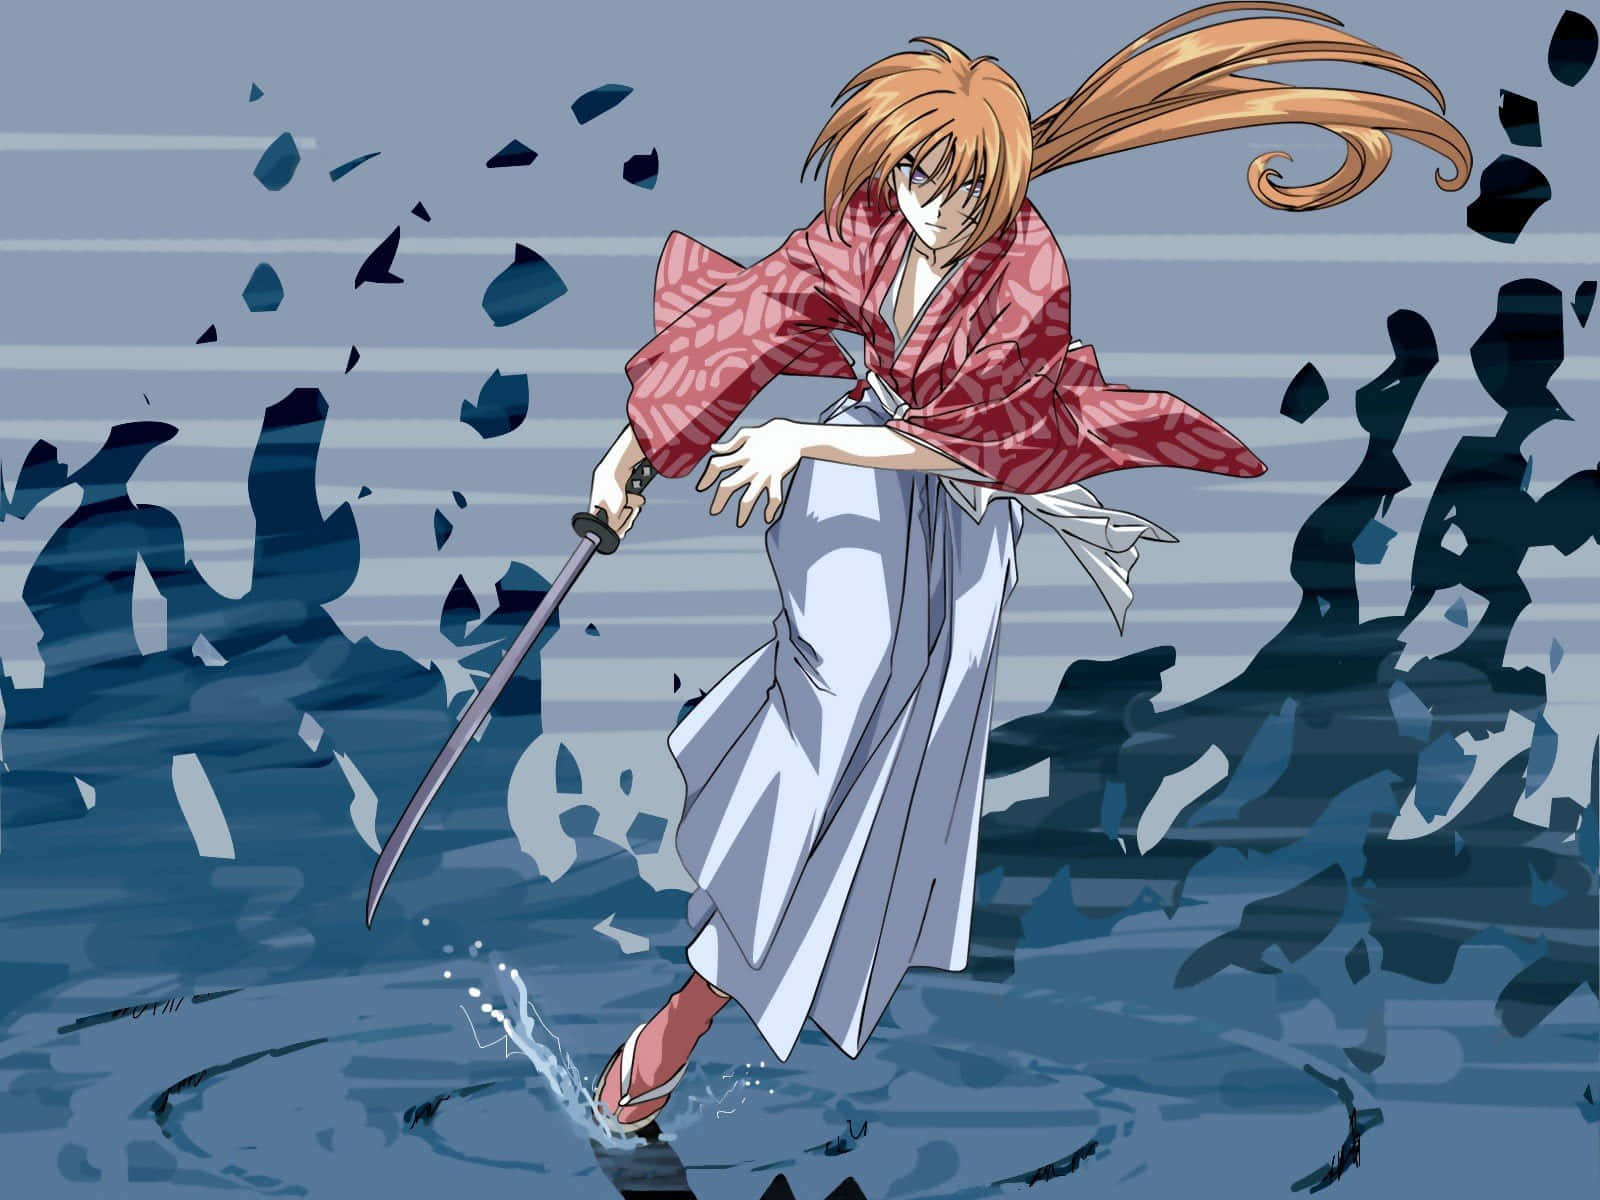 Samurai X's Protagonist Kenshin Himura In Battle Pose Wallpaper